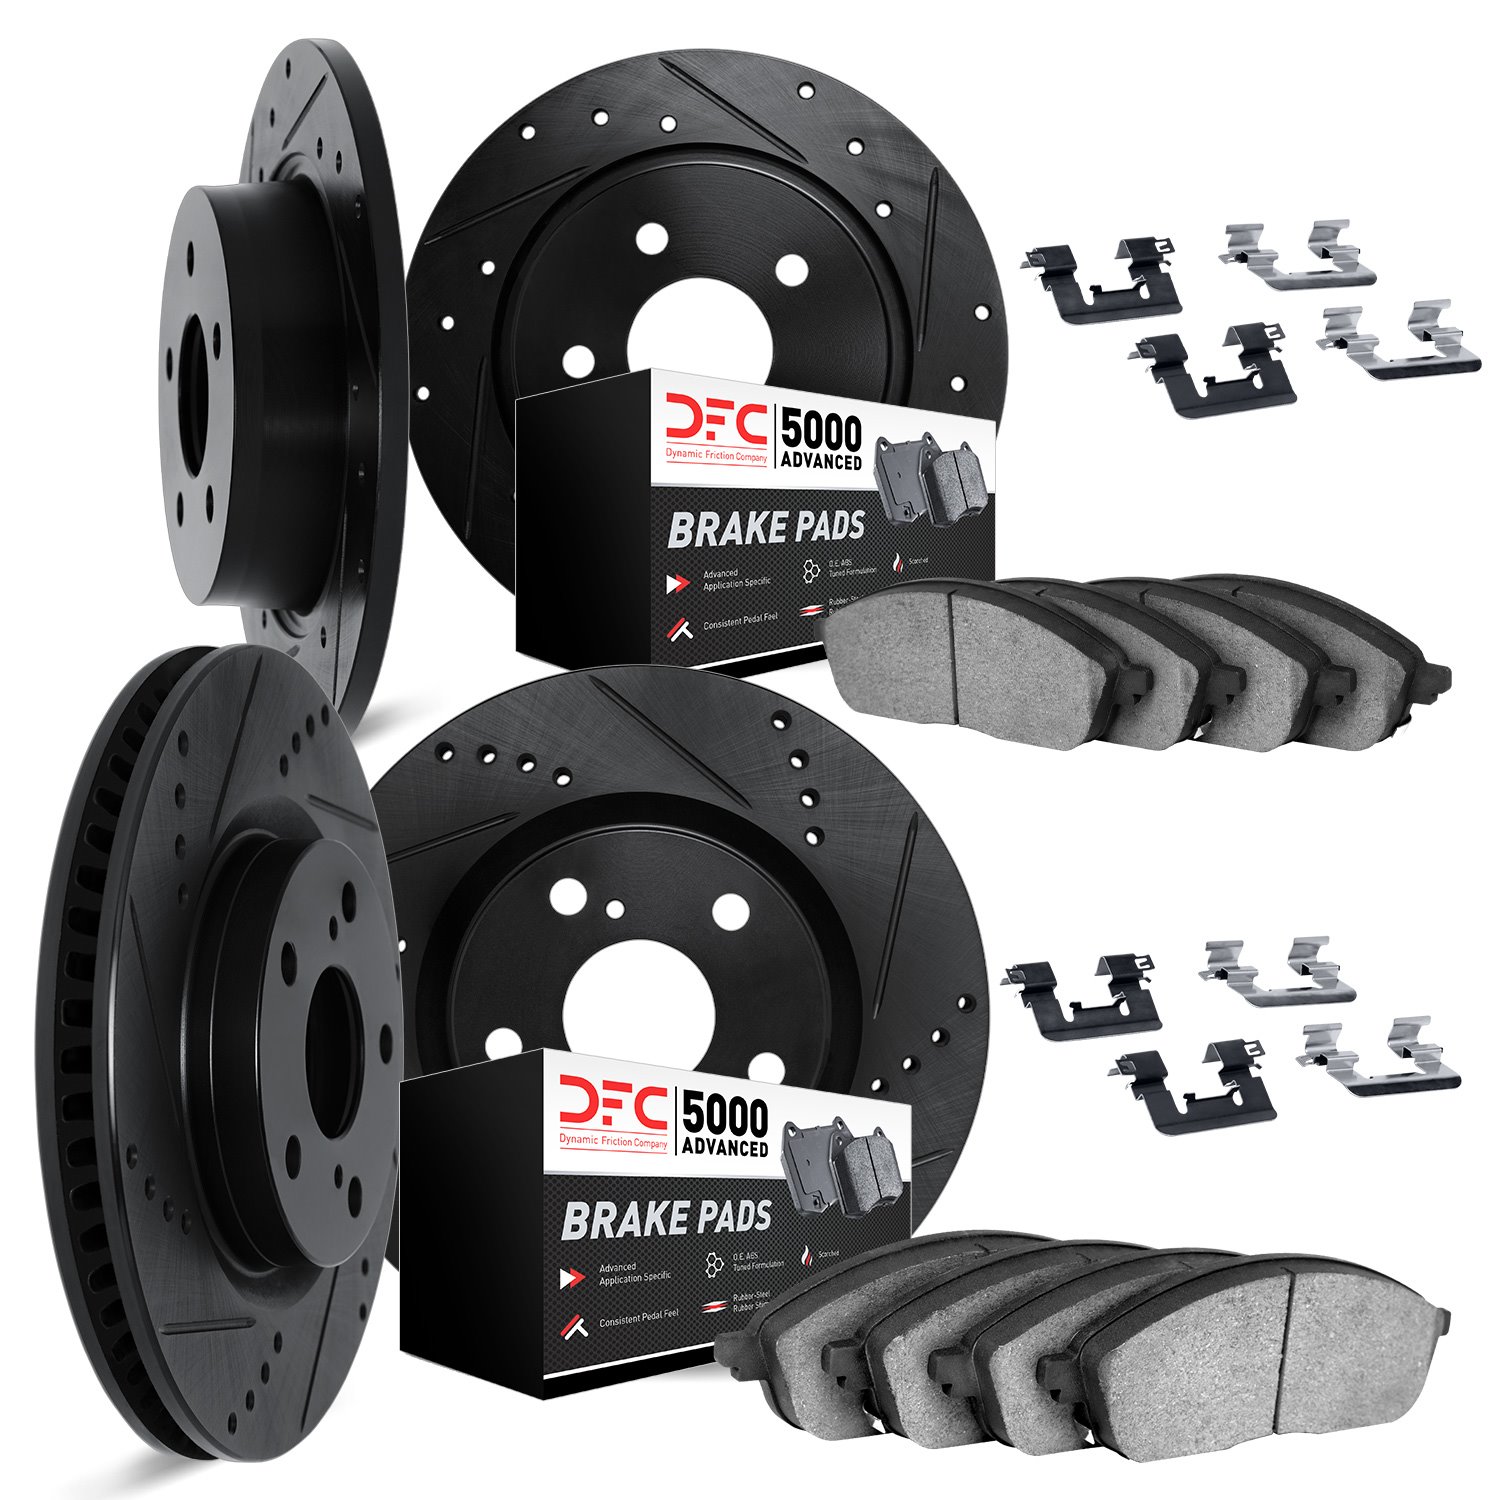 8514-54378 Drilled/Slotted Brake Rotors w/5000 Advanced Brake Pads Kit & Hardware [Black], 2013-2020 Ford/Lincoln/Mercury/Mazda,